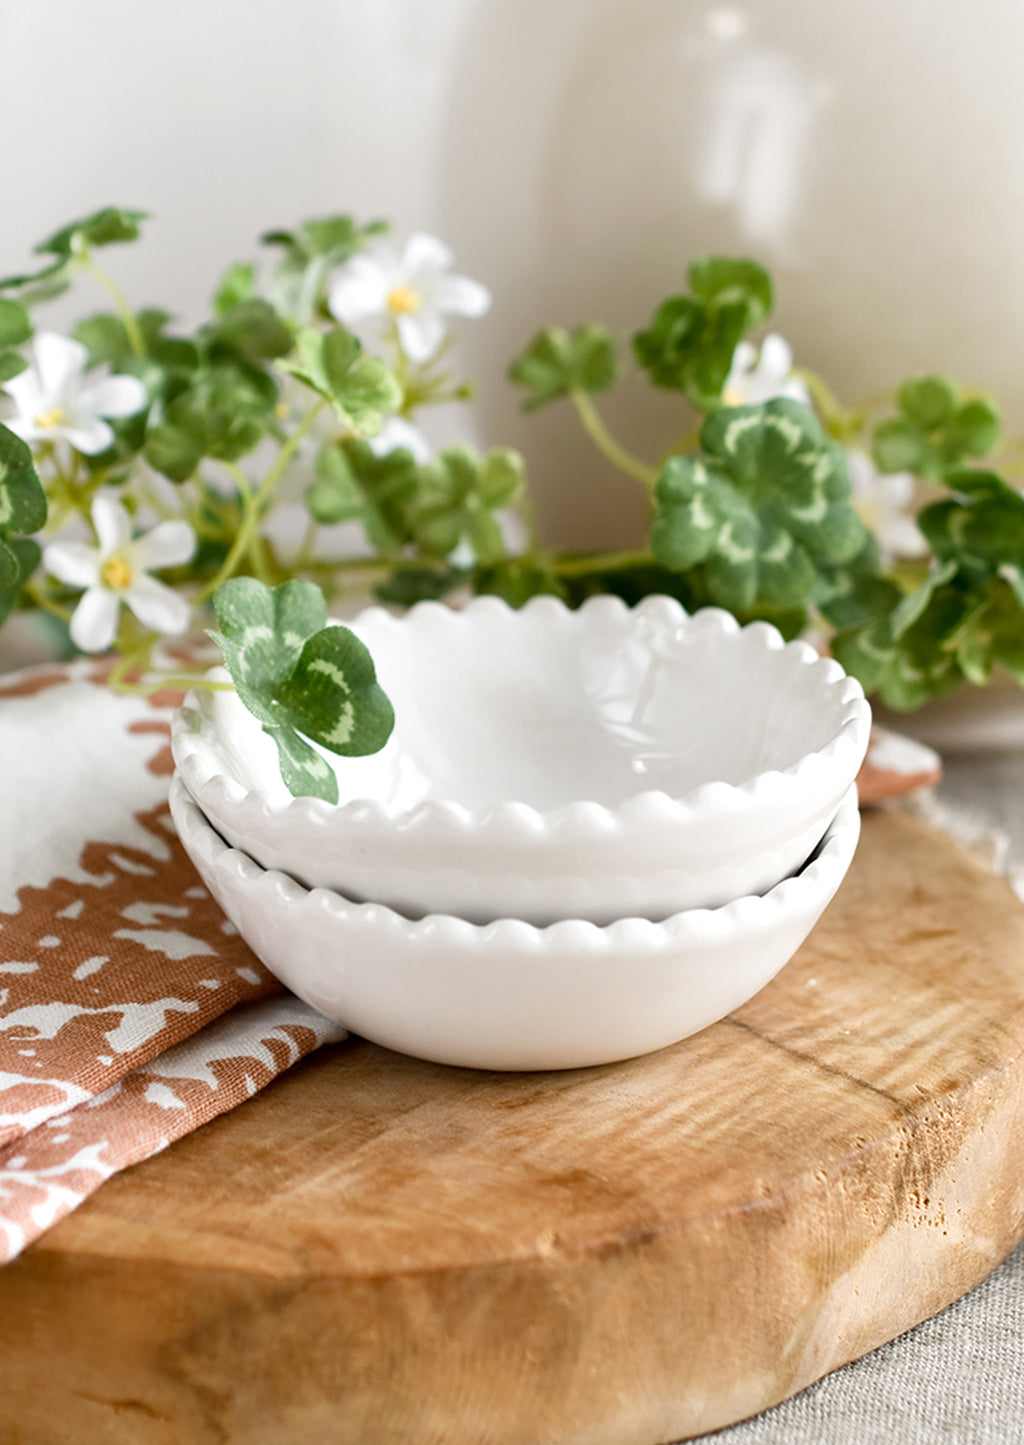 White: A small ceramic bowl with scalloped rim in white.